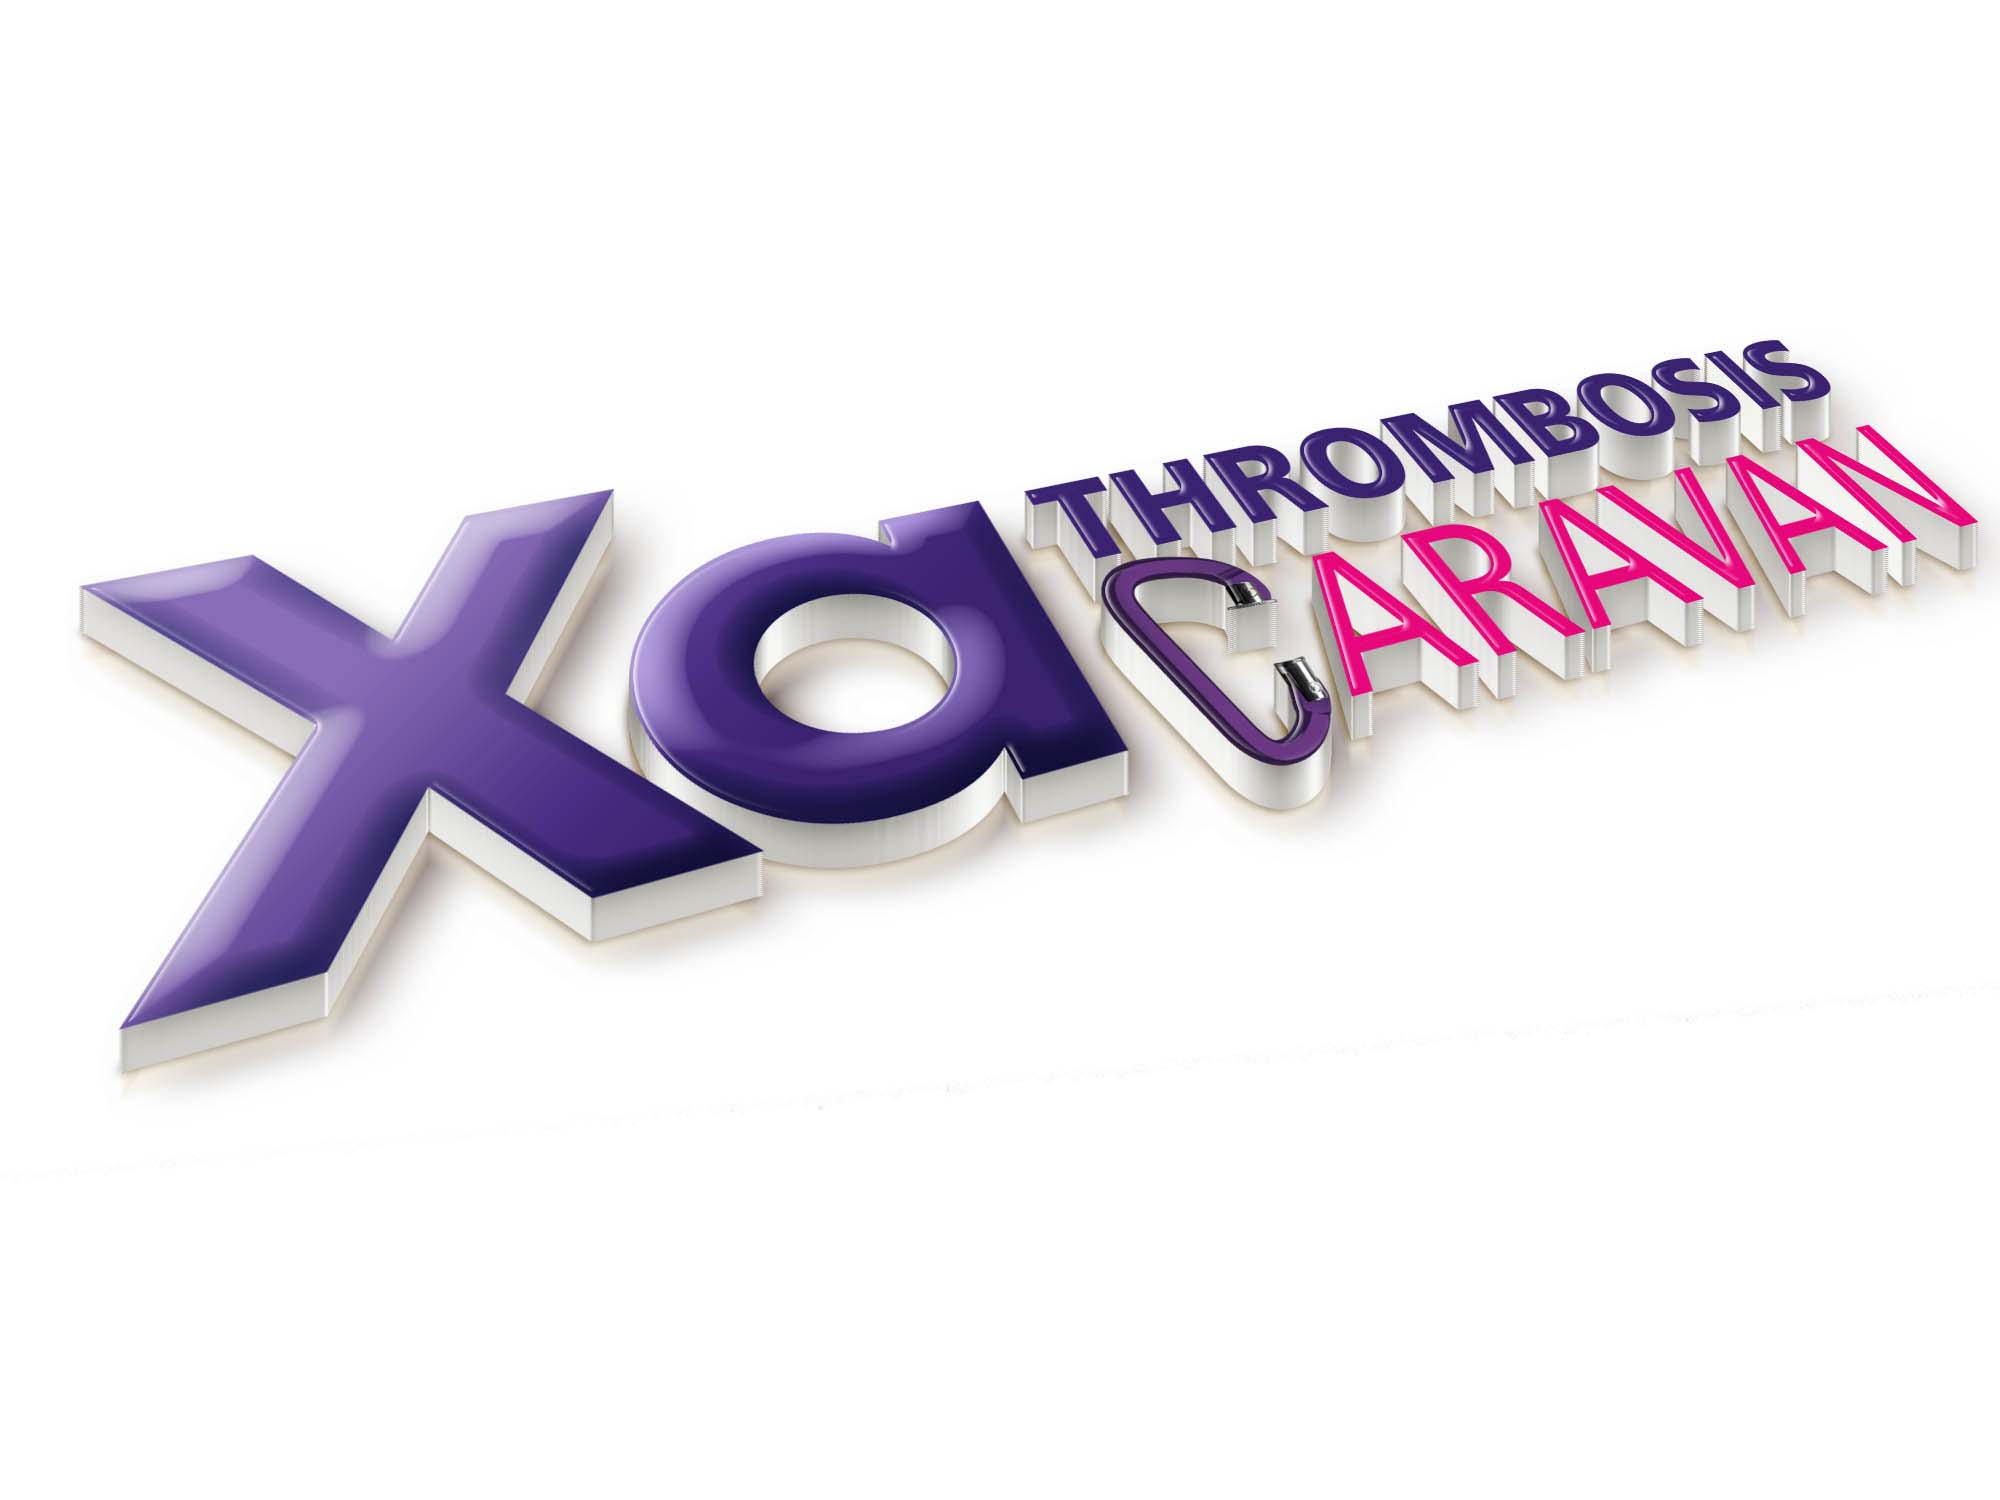 XA Thrombosis Caravan - Identity